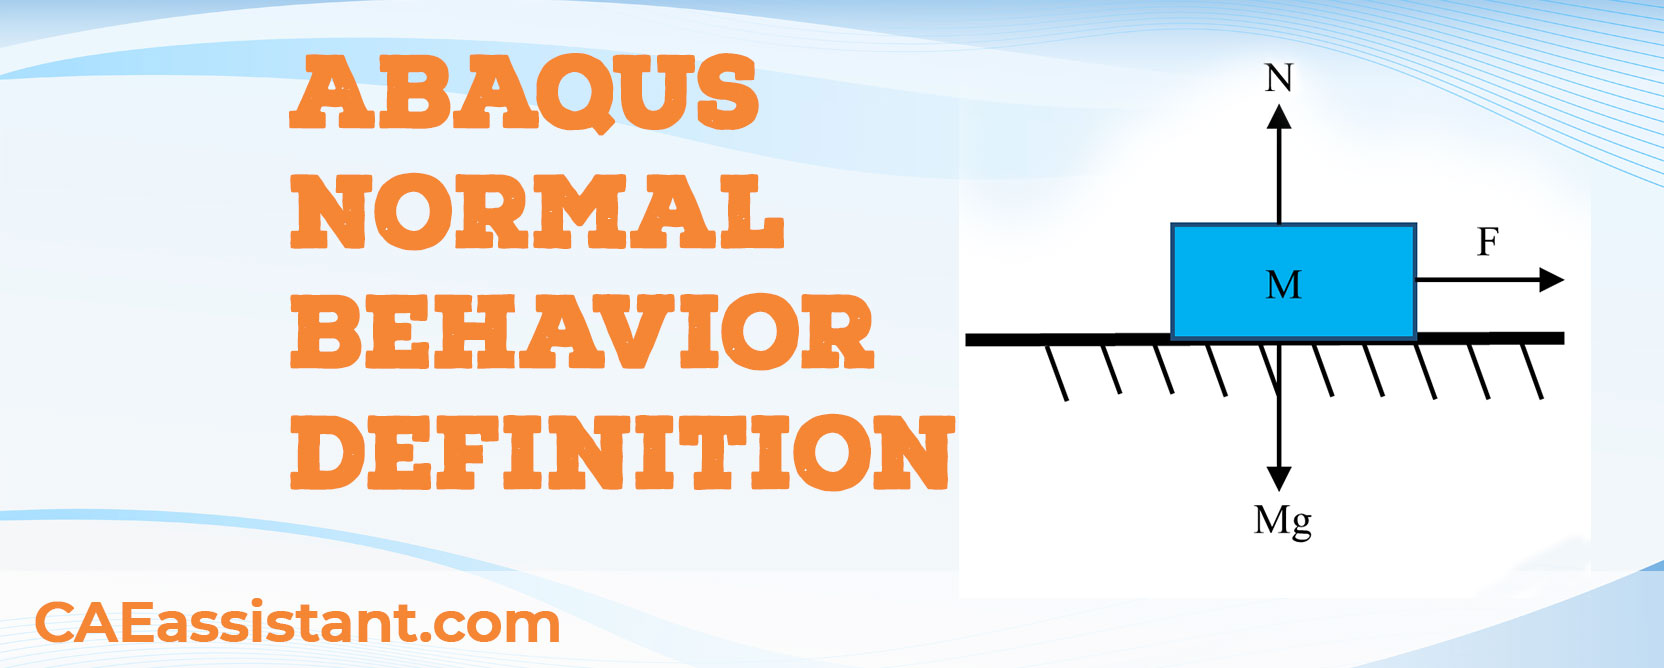 abaqus normal behavior